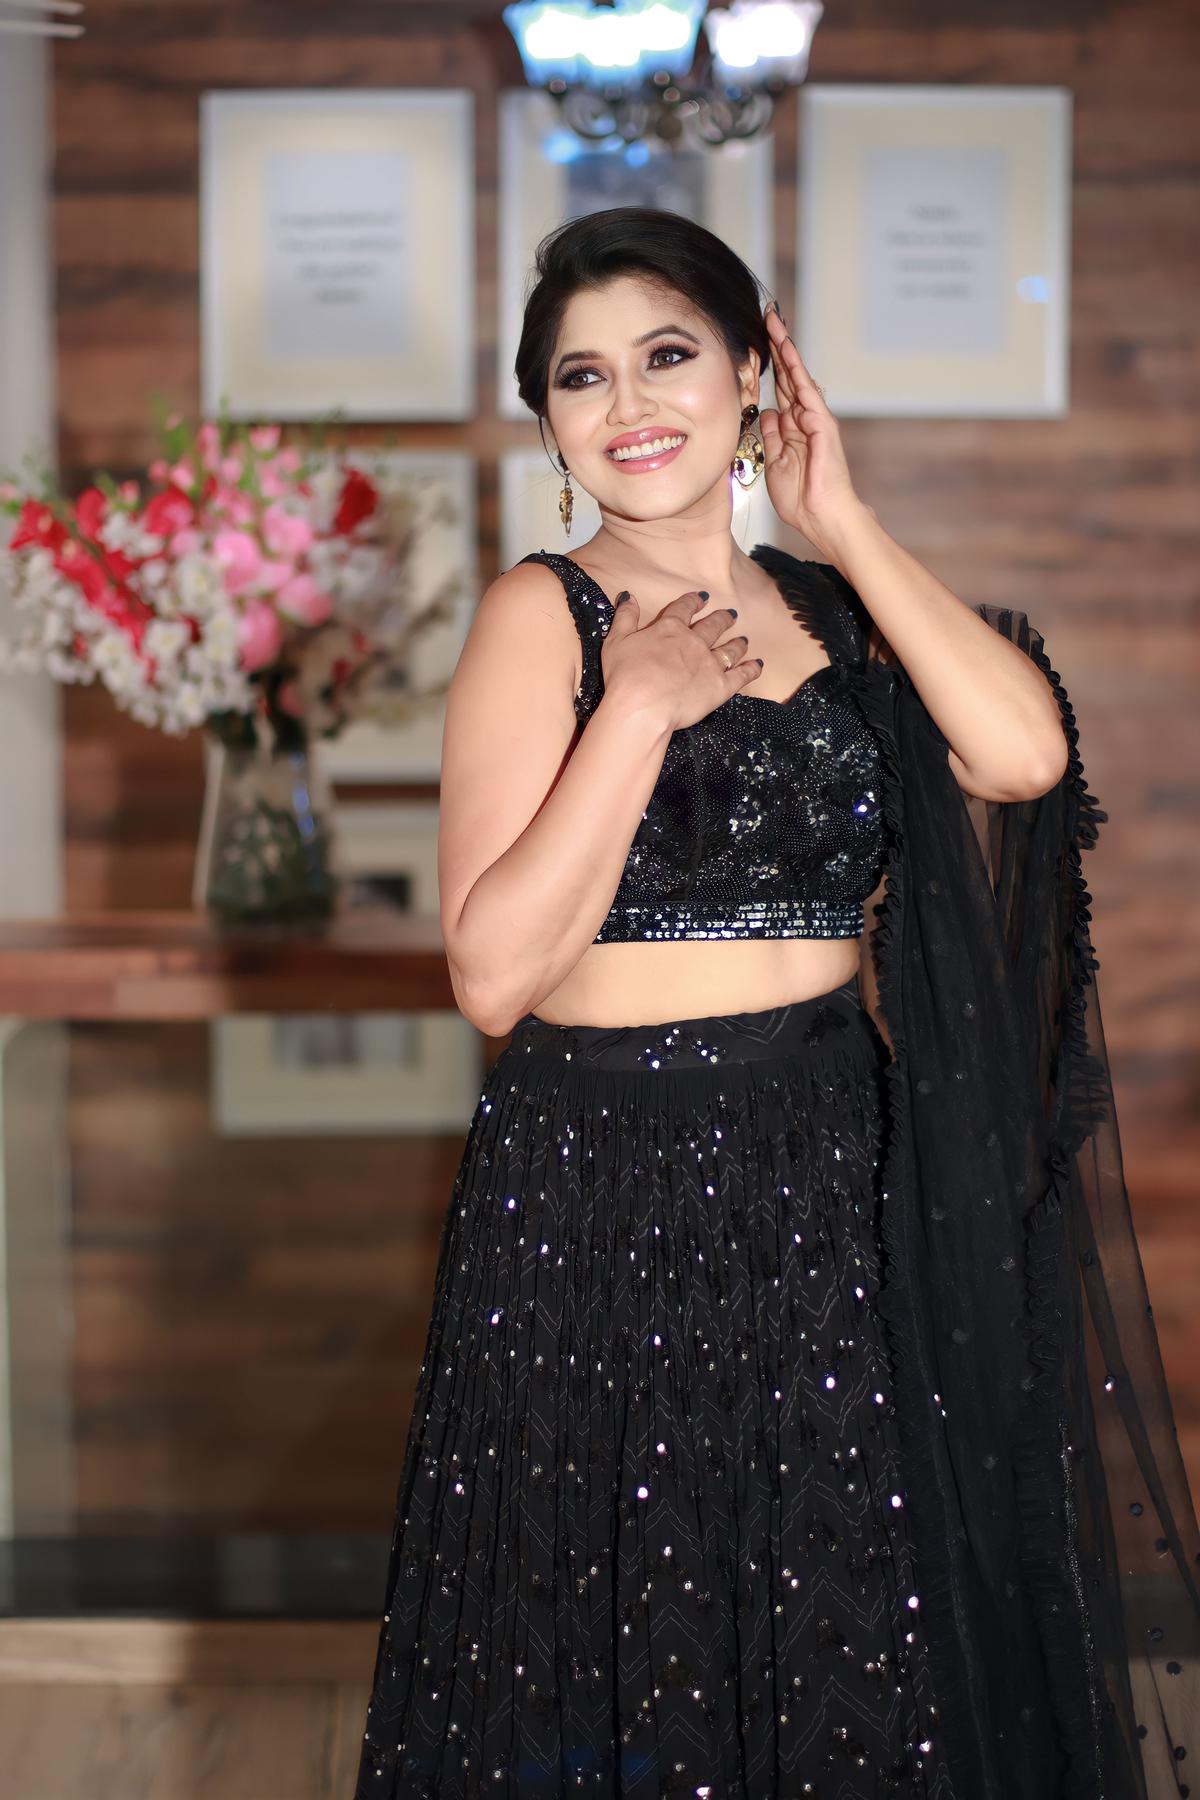 Full Flair Black Navratri Chaniya Choli With Mirror Work – Palkhi Fashion